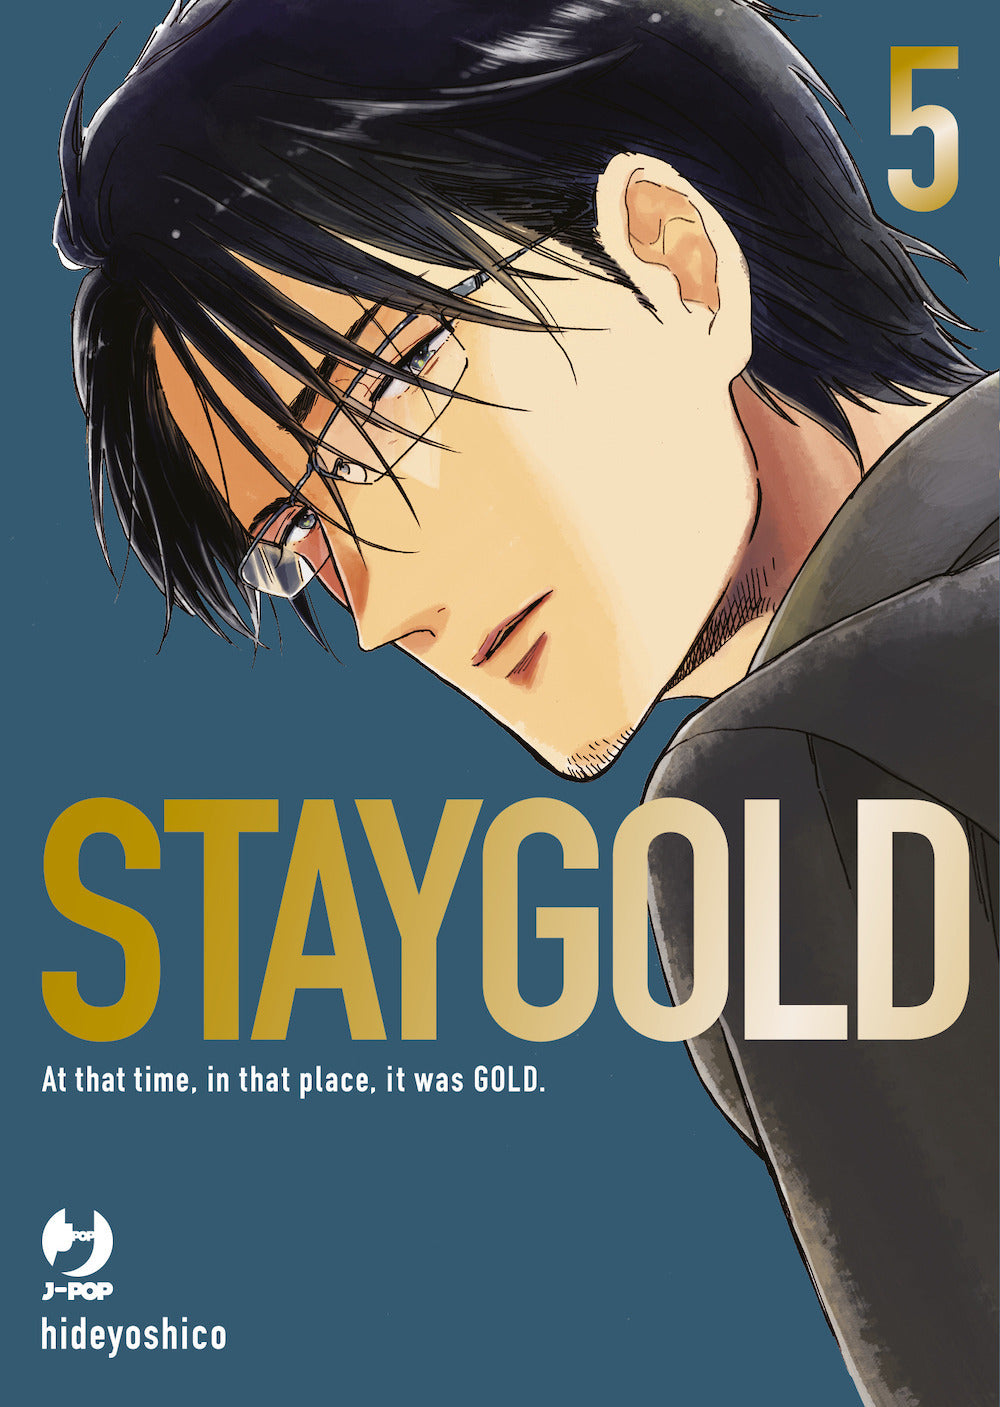 Staygold. Vol. 5